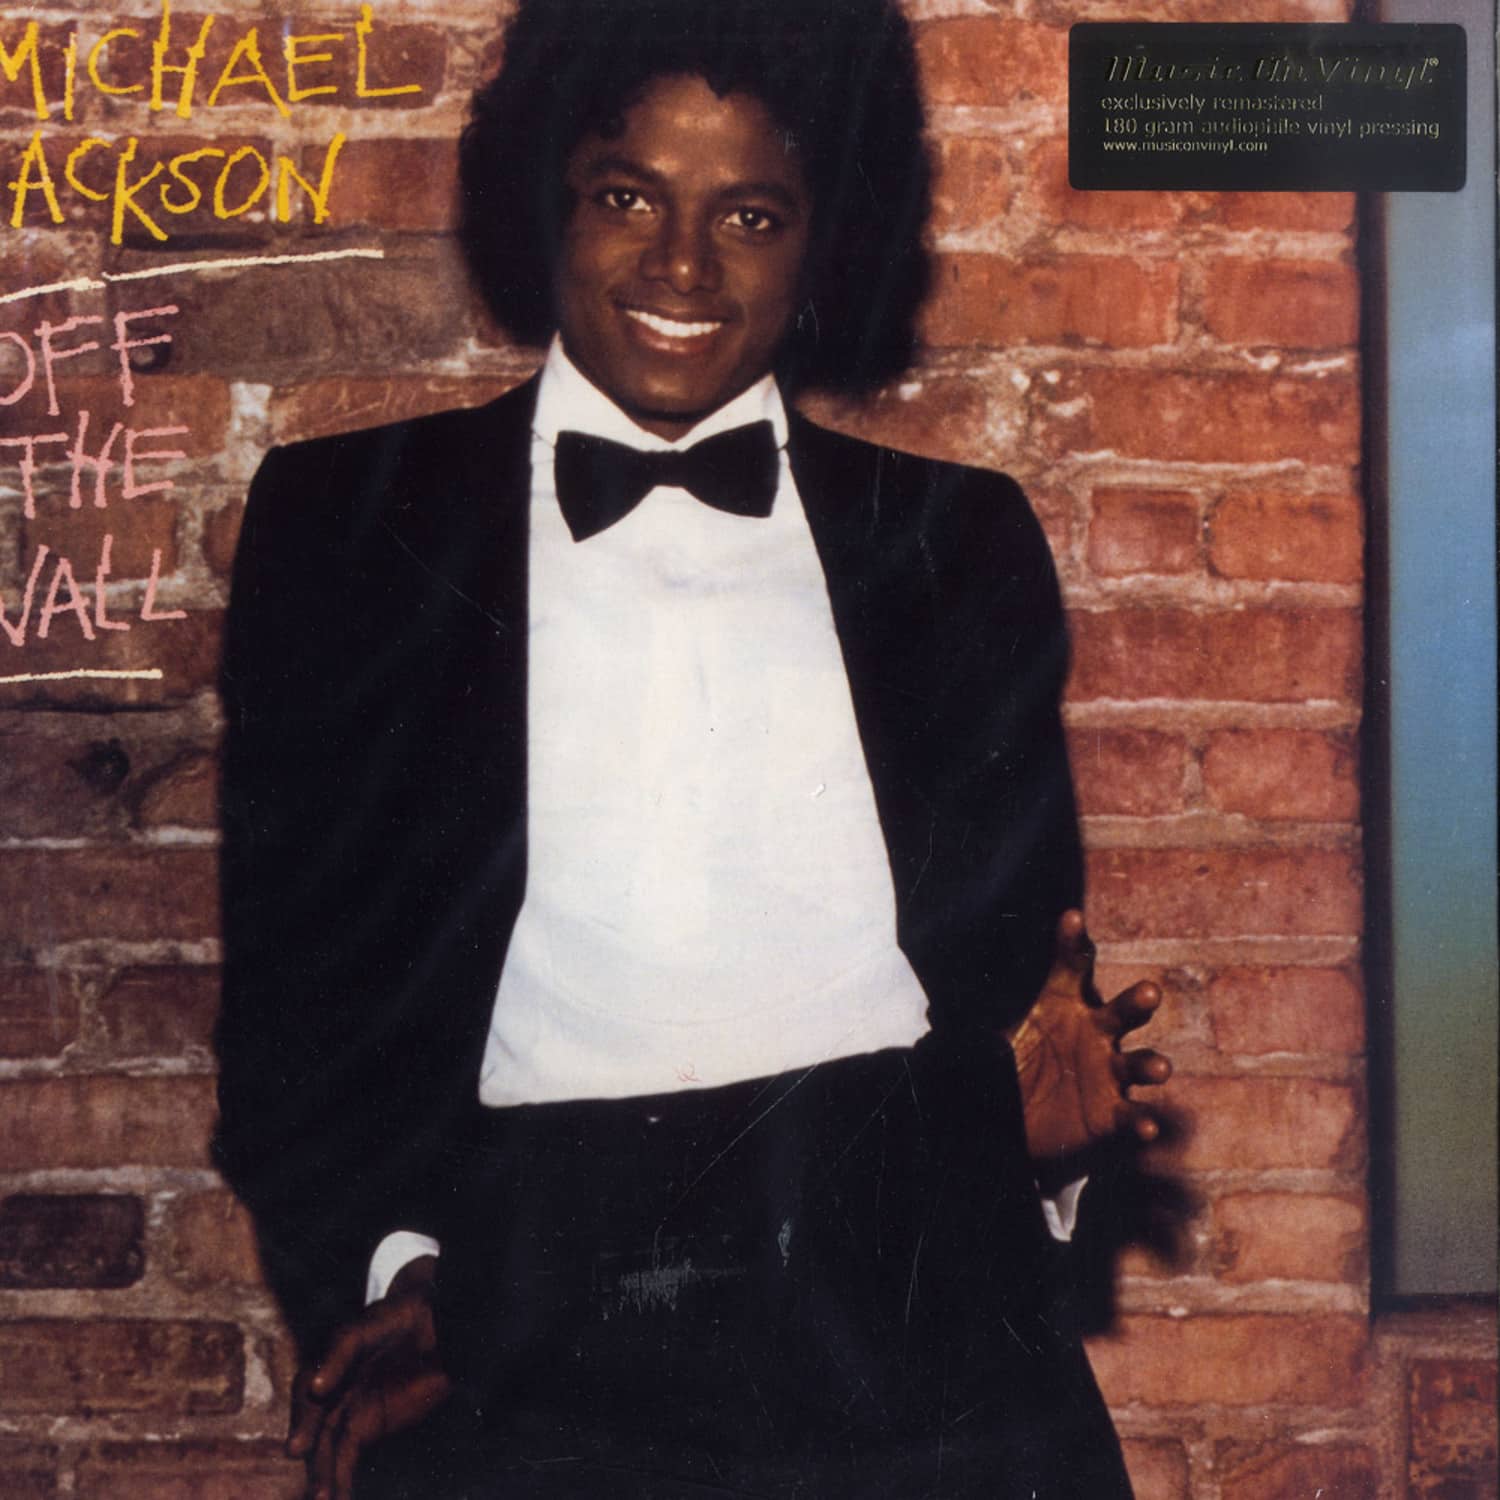 Michael Jackson - OFF THE WALL - ALBUM 